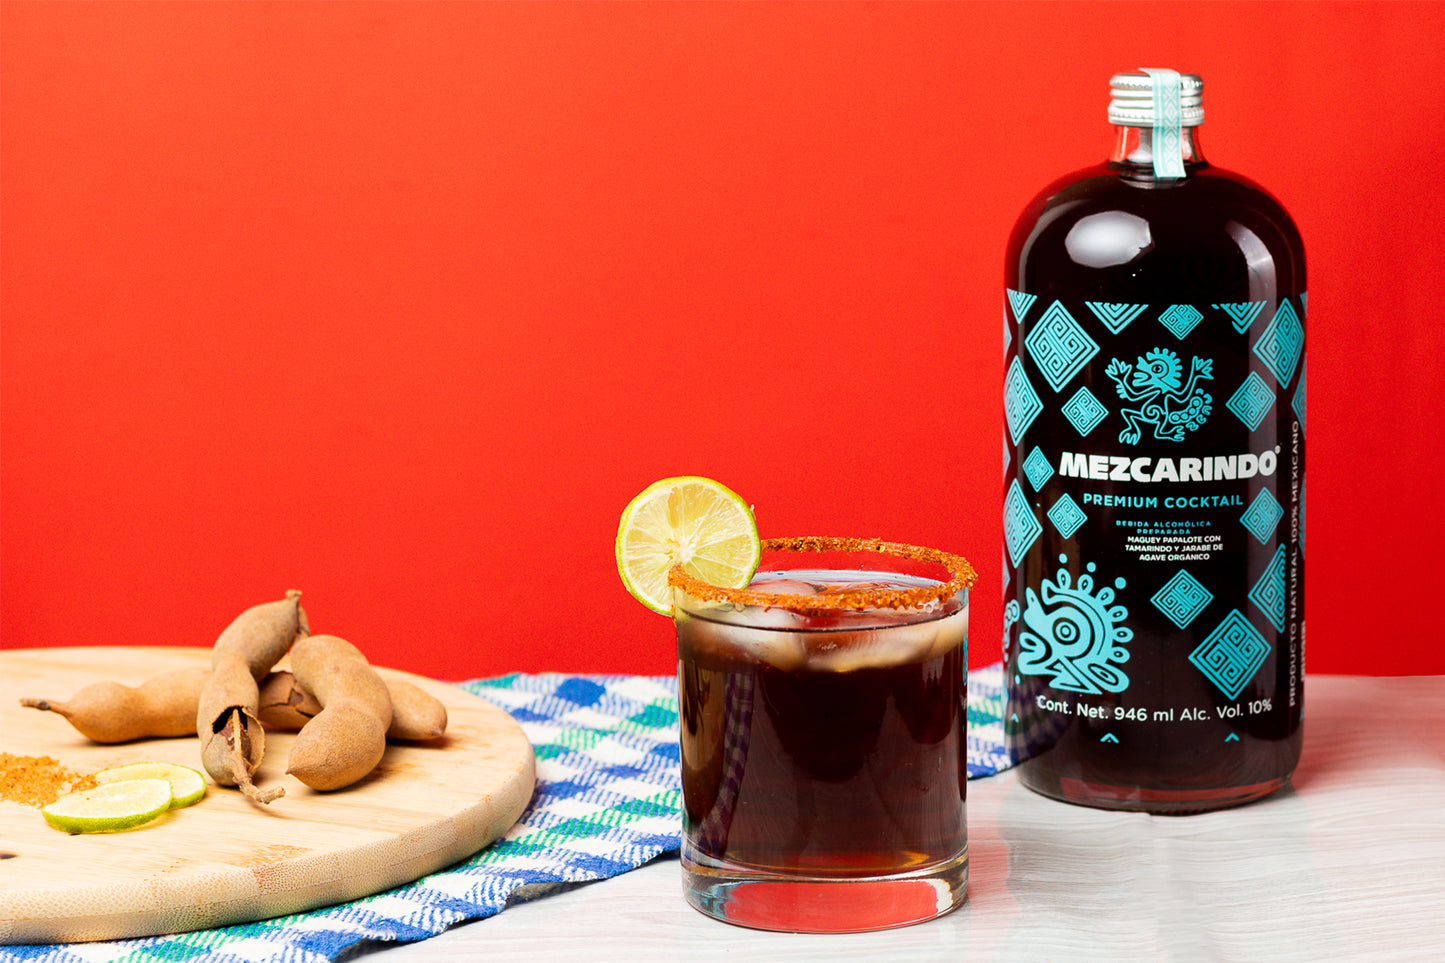 Mixed box 295 ml 2 Mezcamaica, 2 Mezcaya, 2 Mezcarindo 6 Premium Cocktail bottles